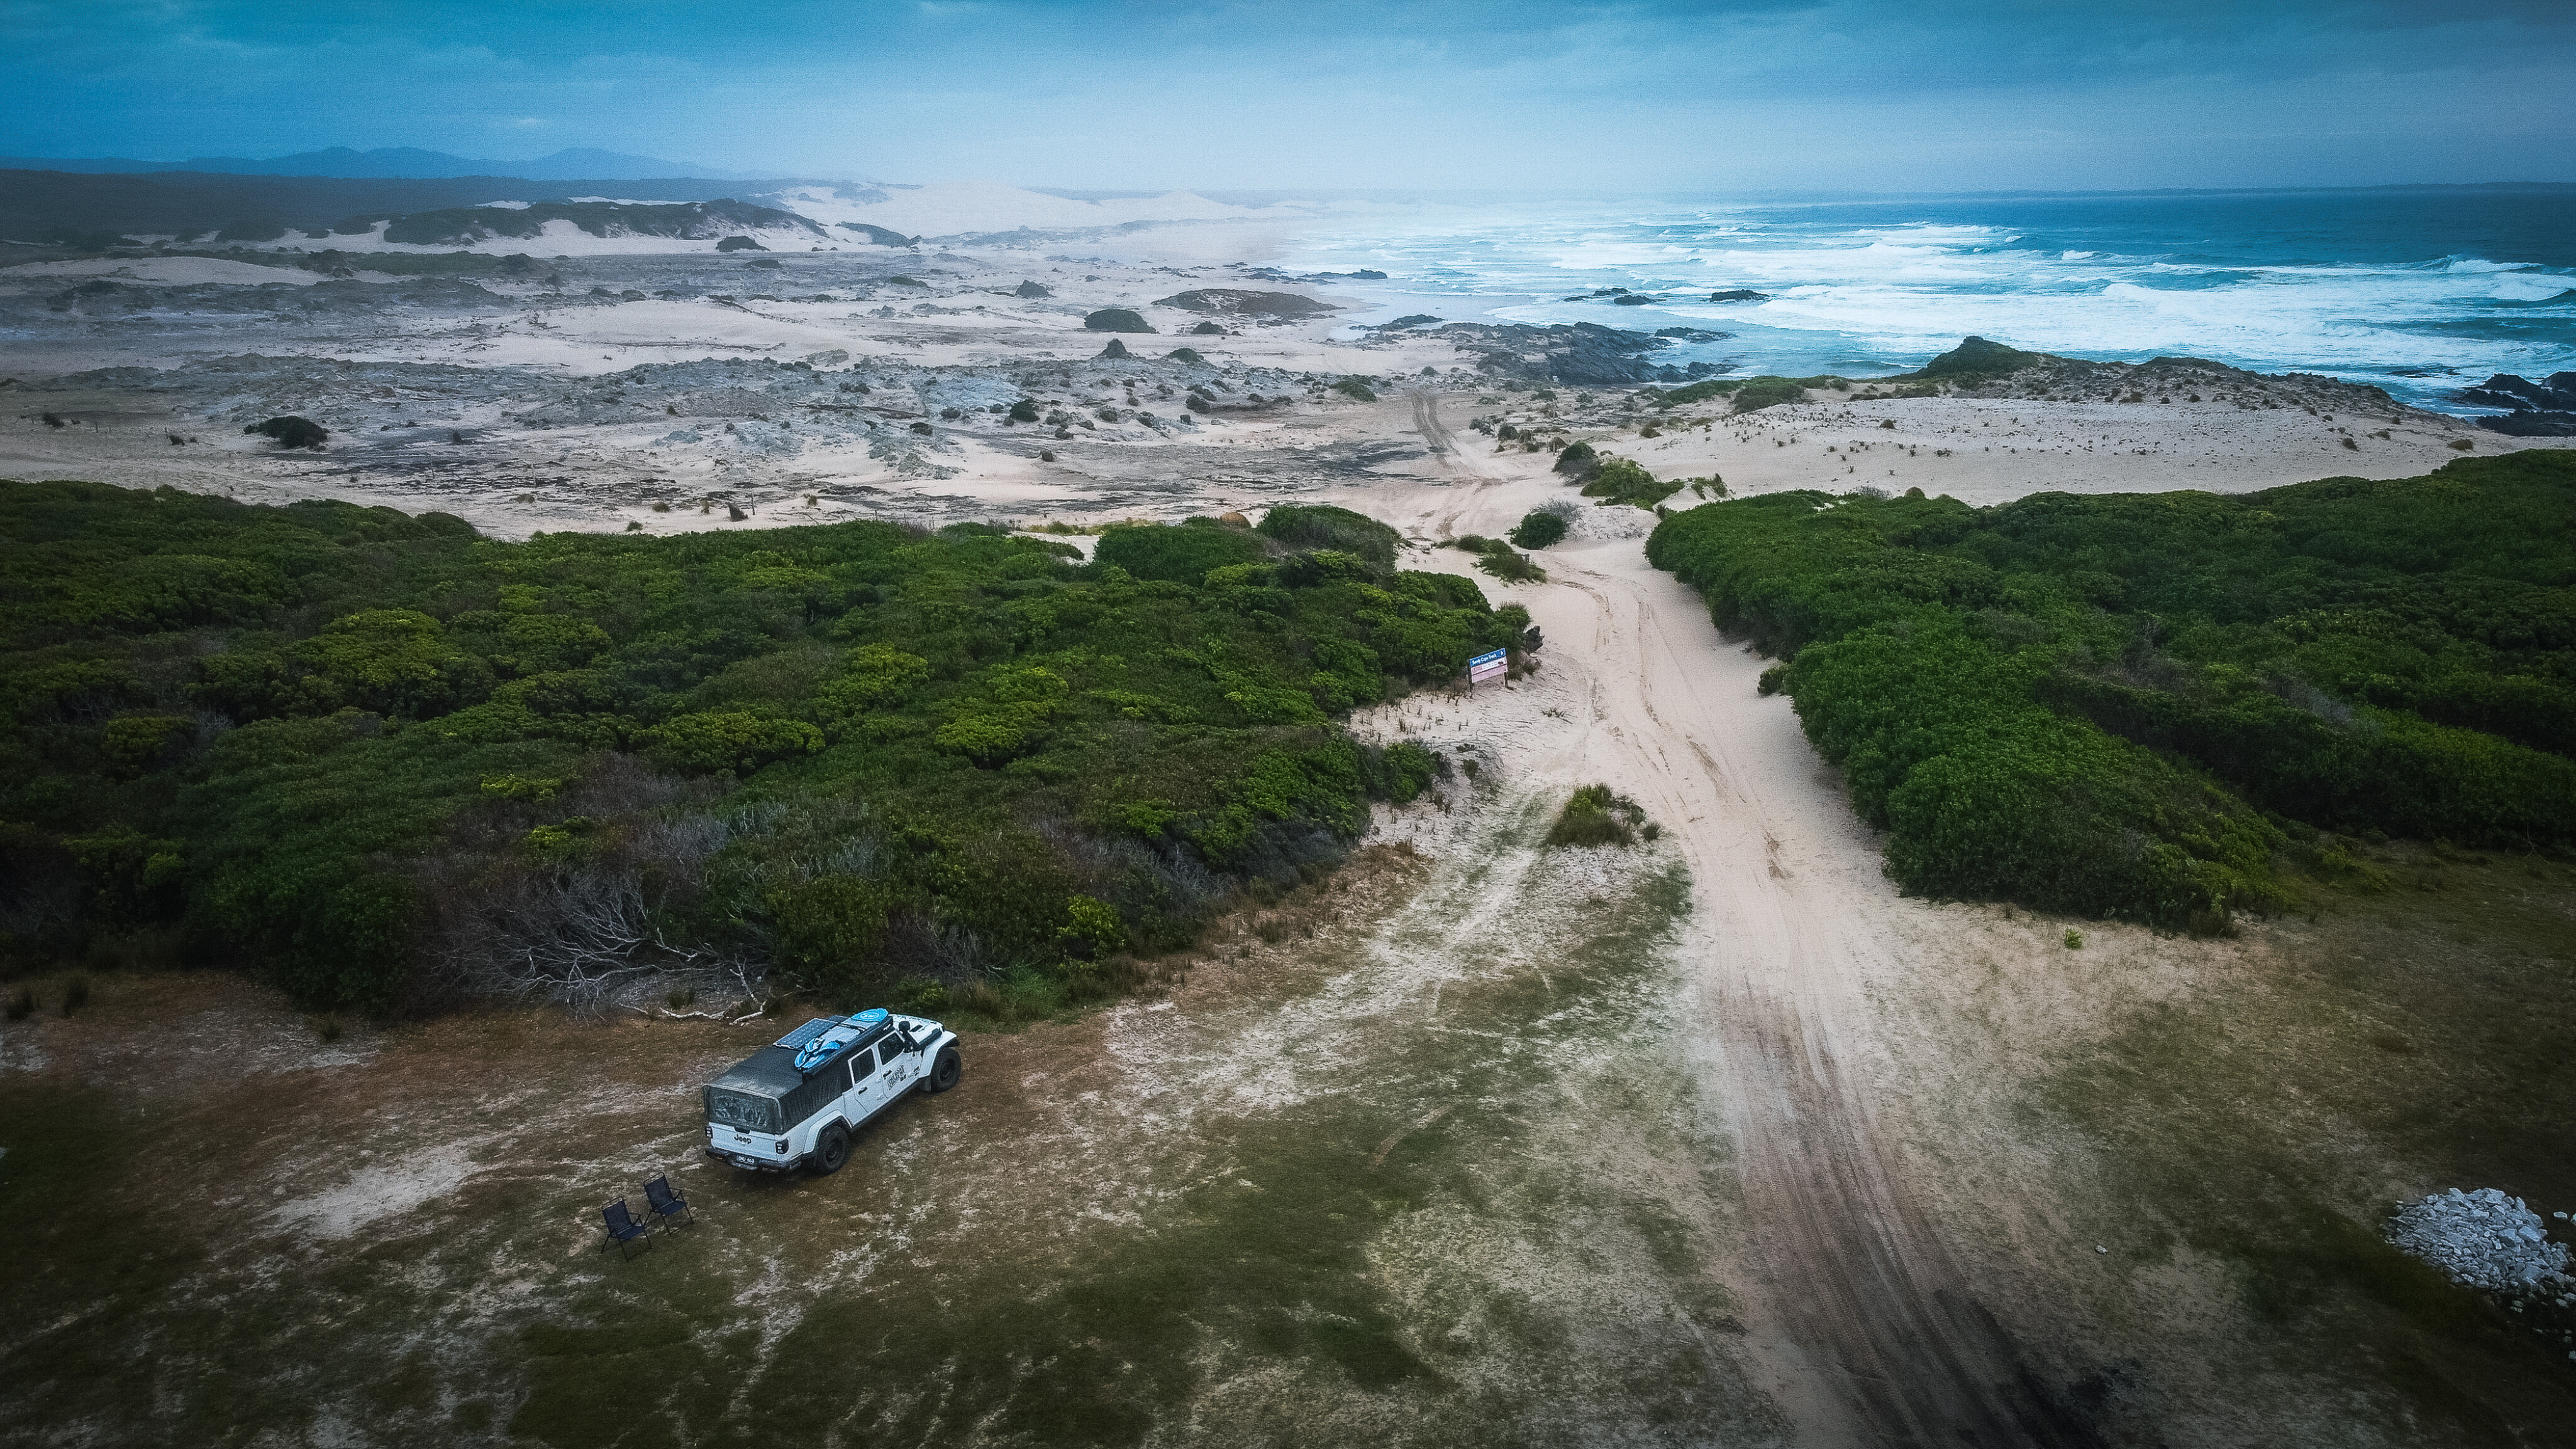 fdc91d58/sandy cape camping dunes 4x4 australia explore tasmania jpg